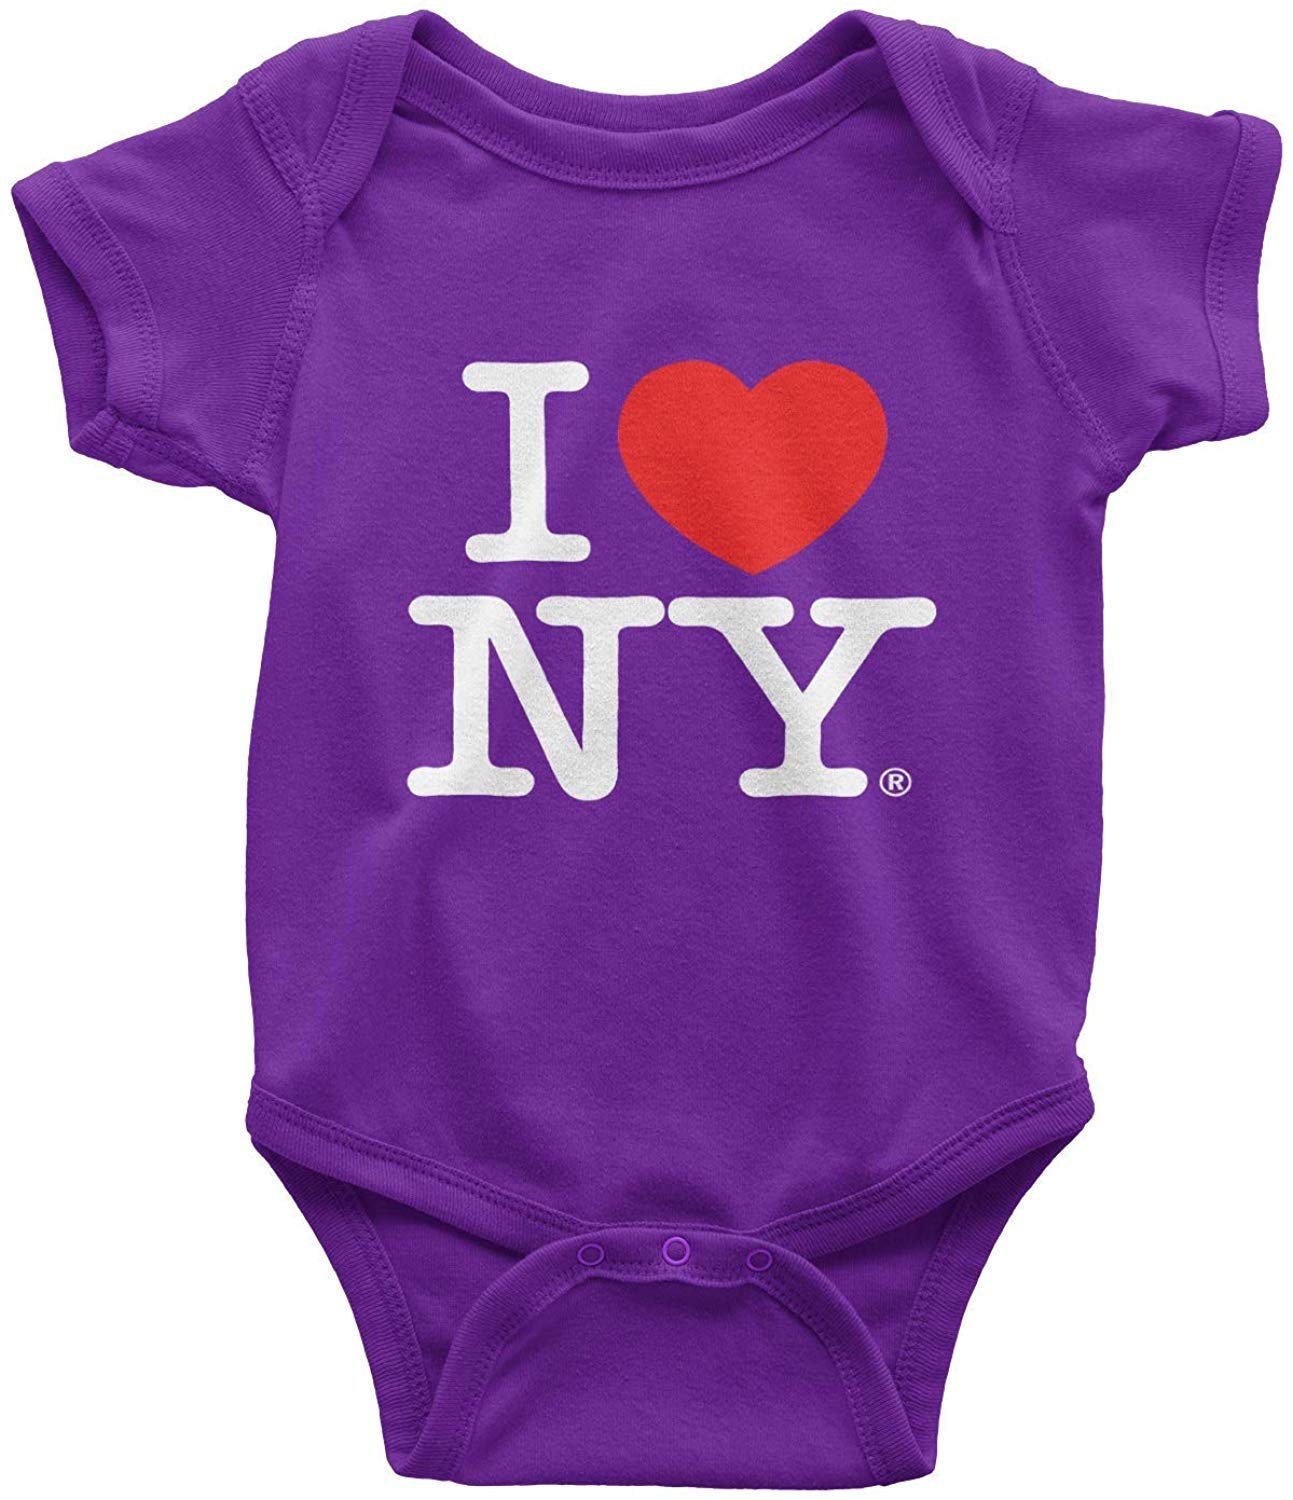 I Love NY Baby Bodysuit Purple